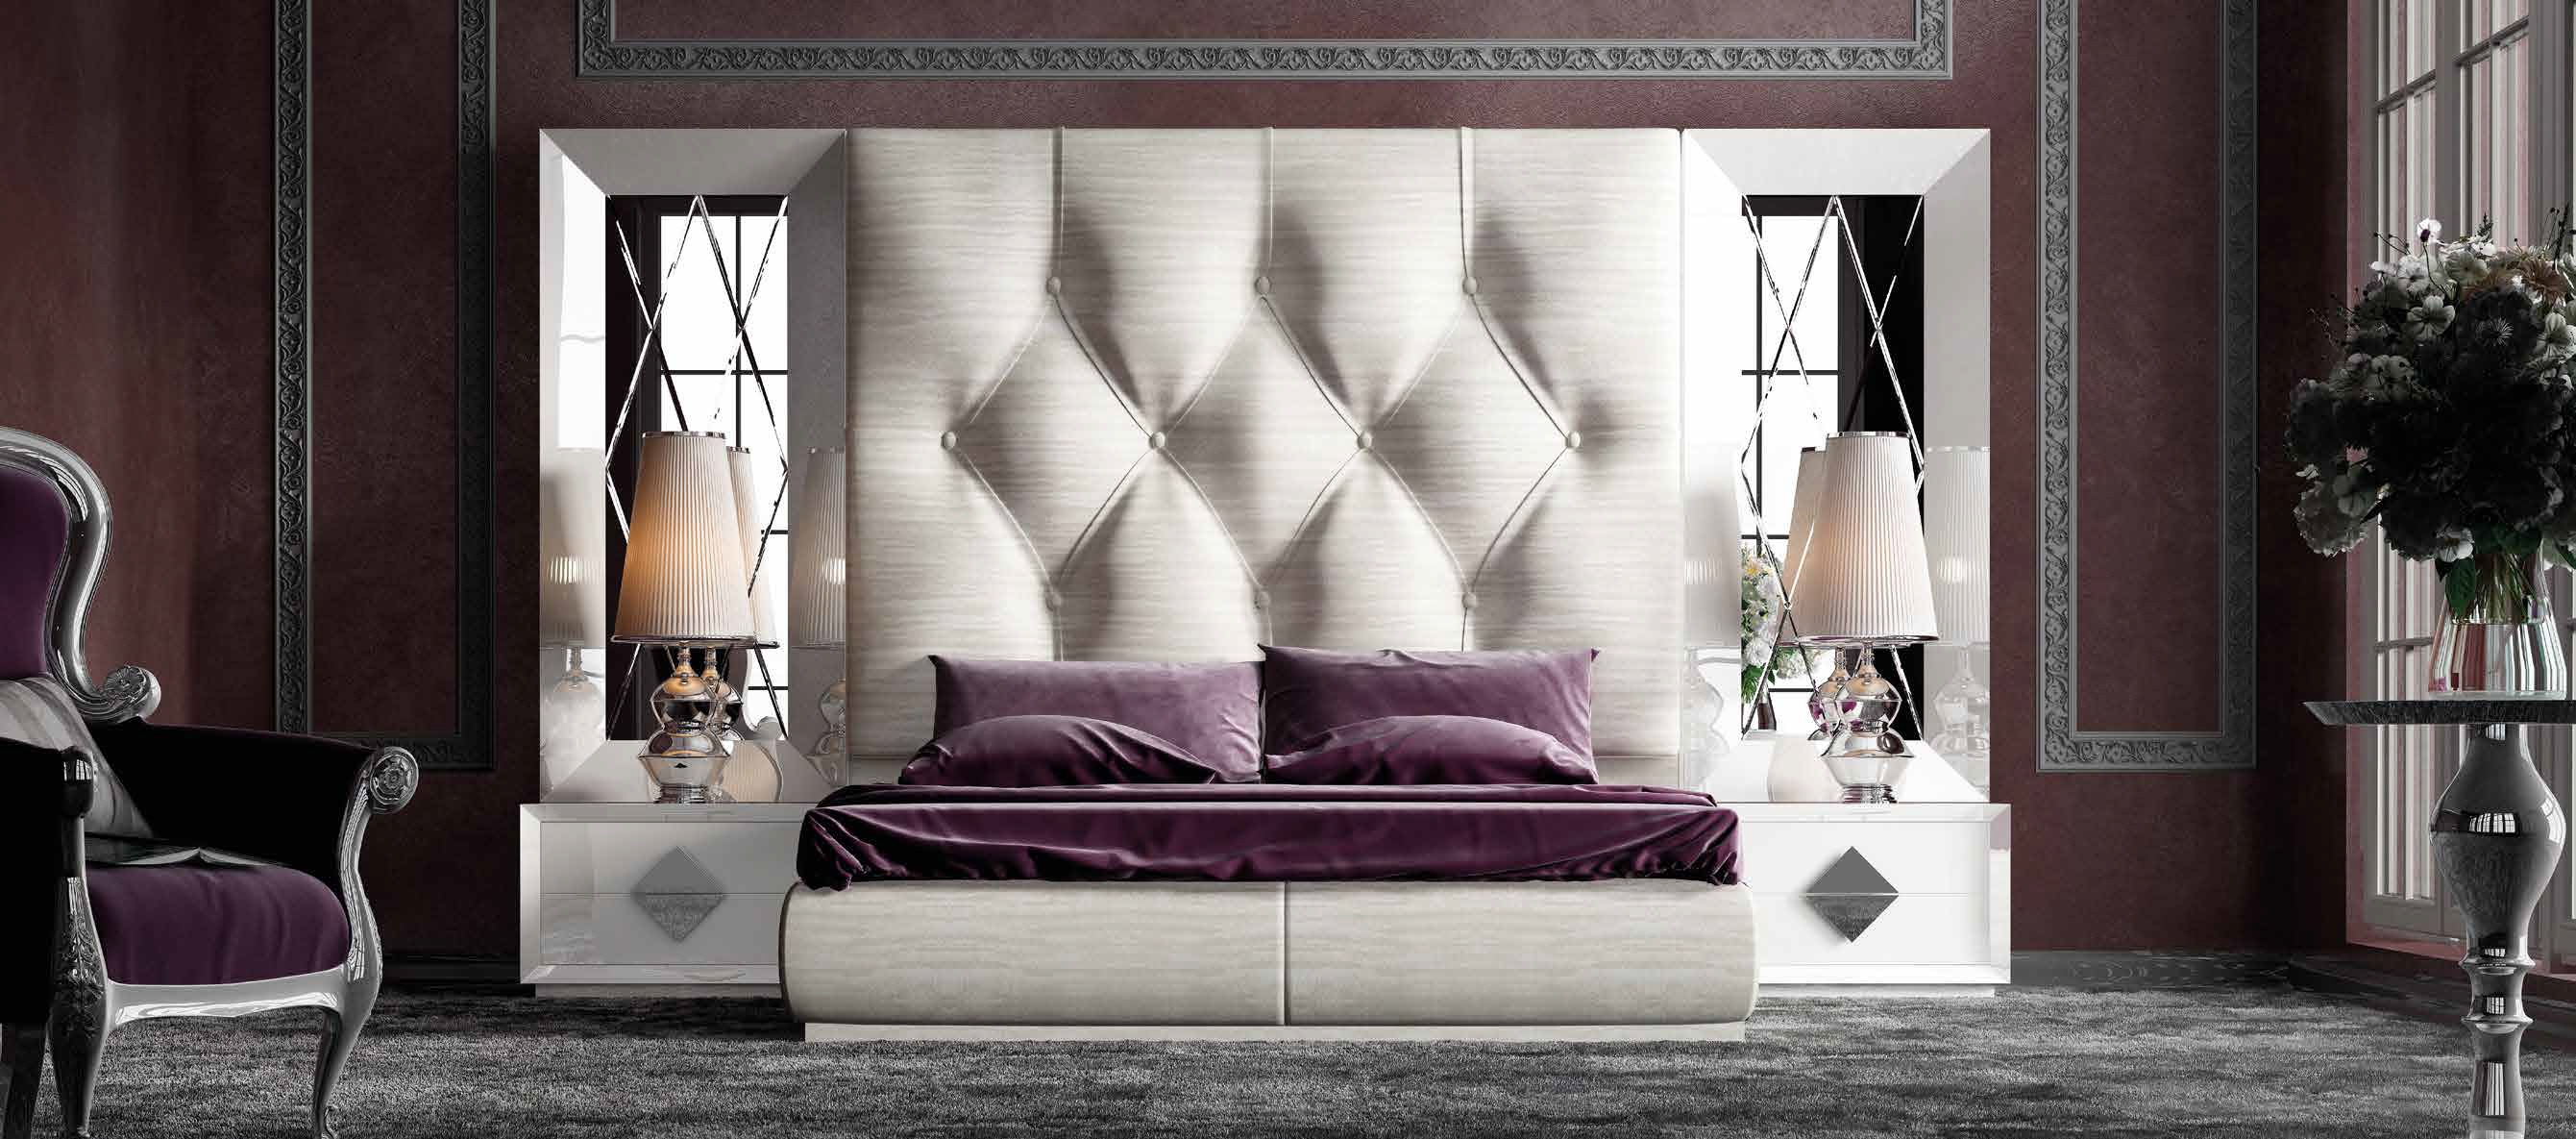 Brands Franco Furniture Bedrooms vol3, Spain DOR 78